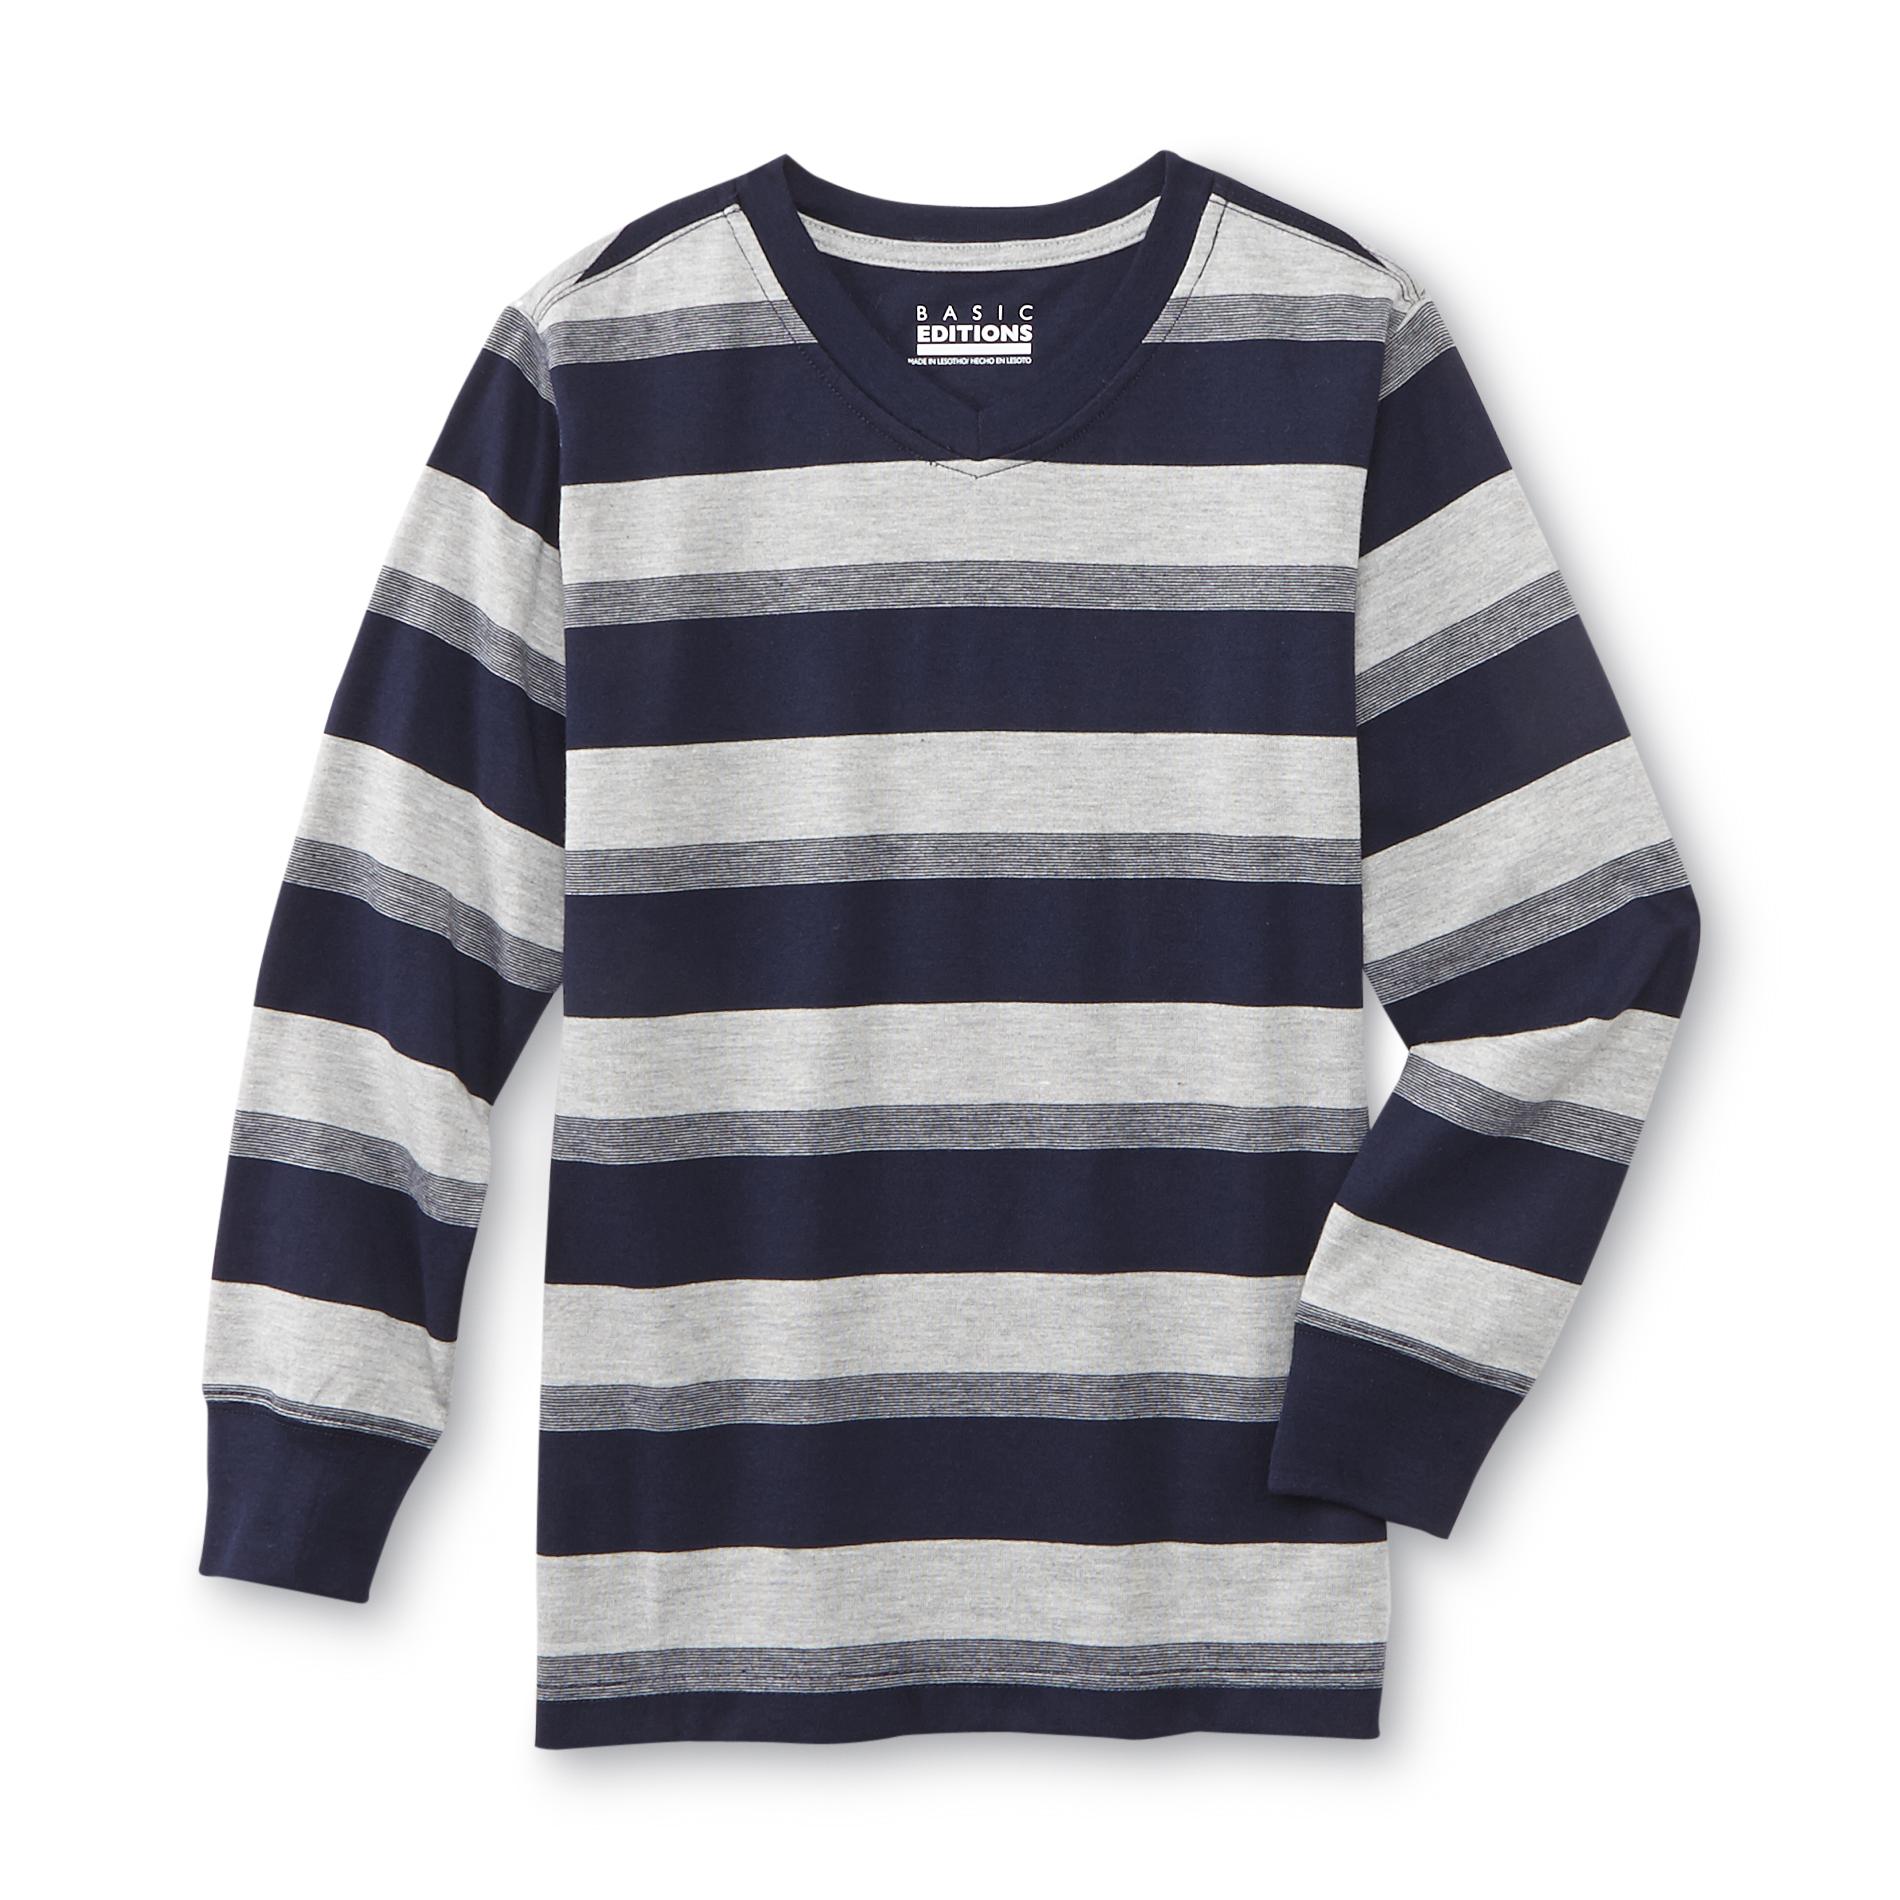 Basic Editions Boy's Long-Sleeve T-shirt - Striped